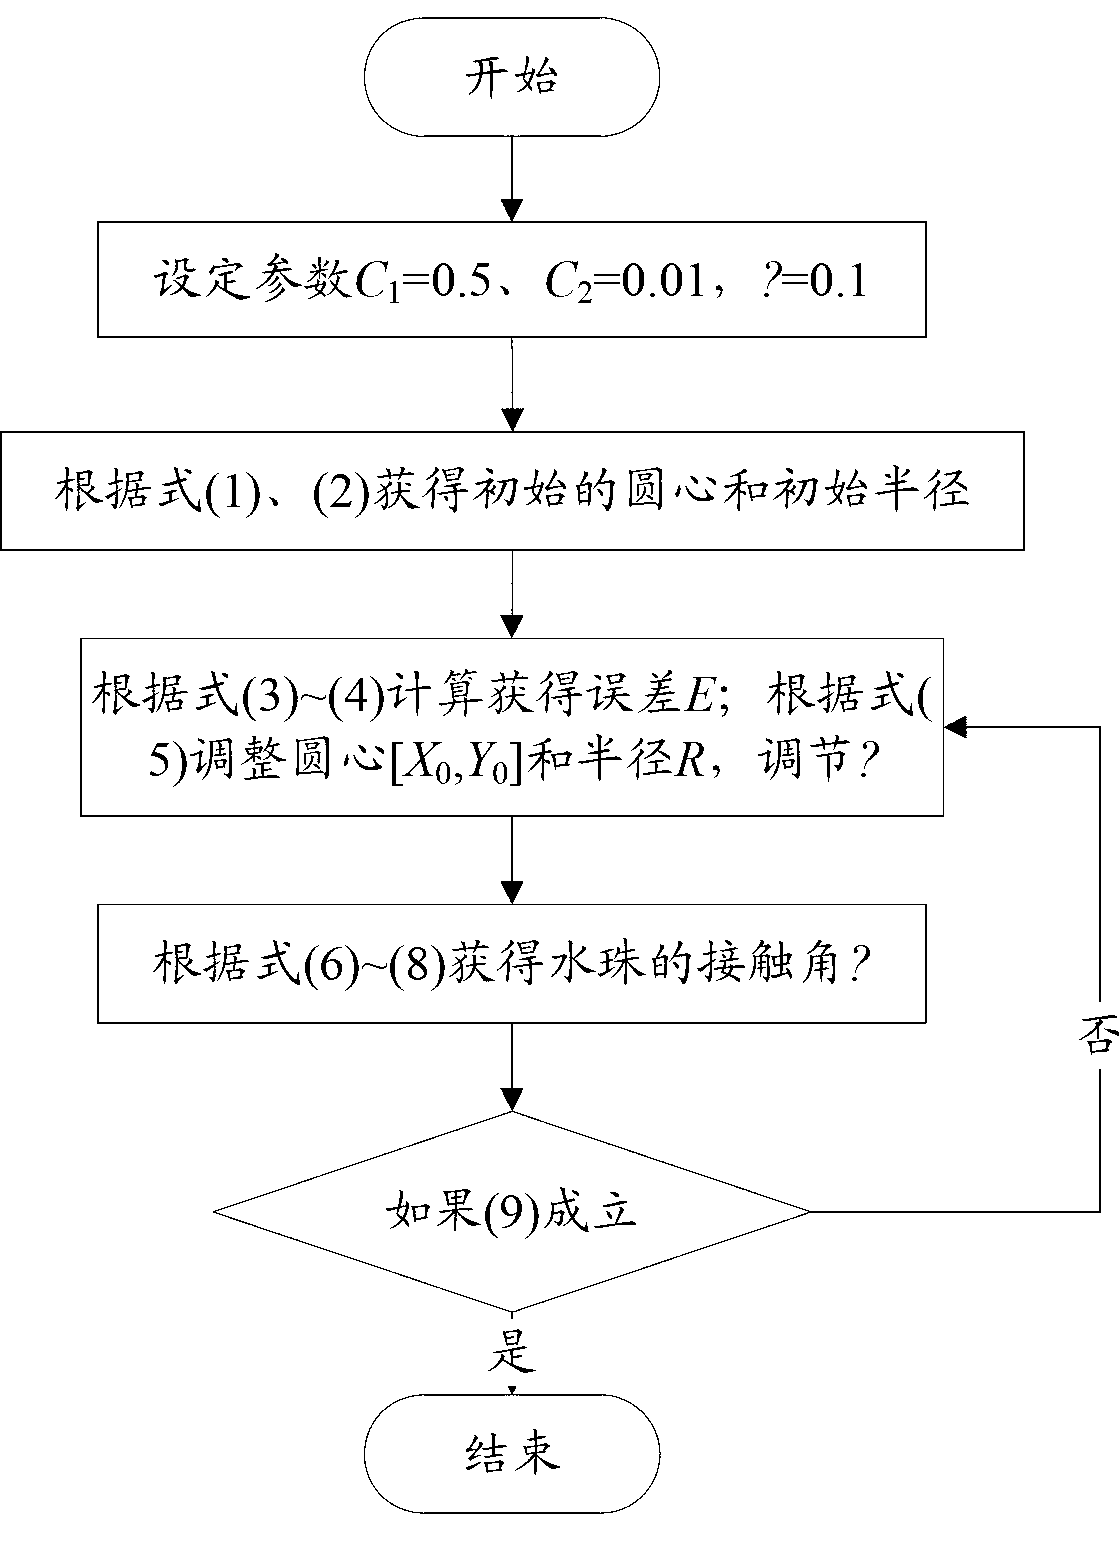 Static contact angle calculation method